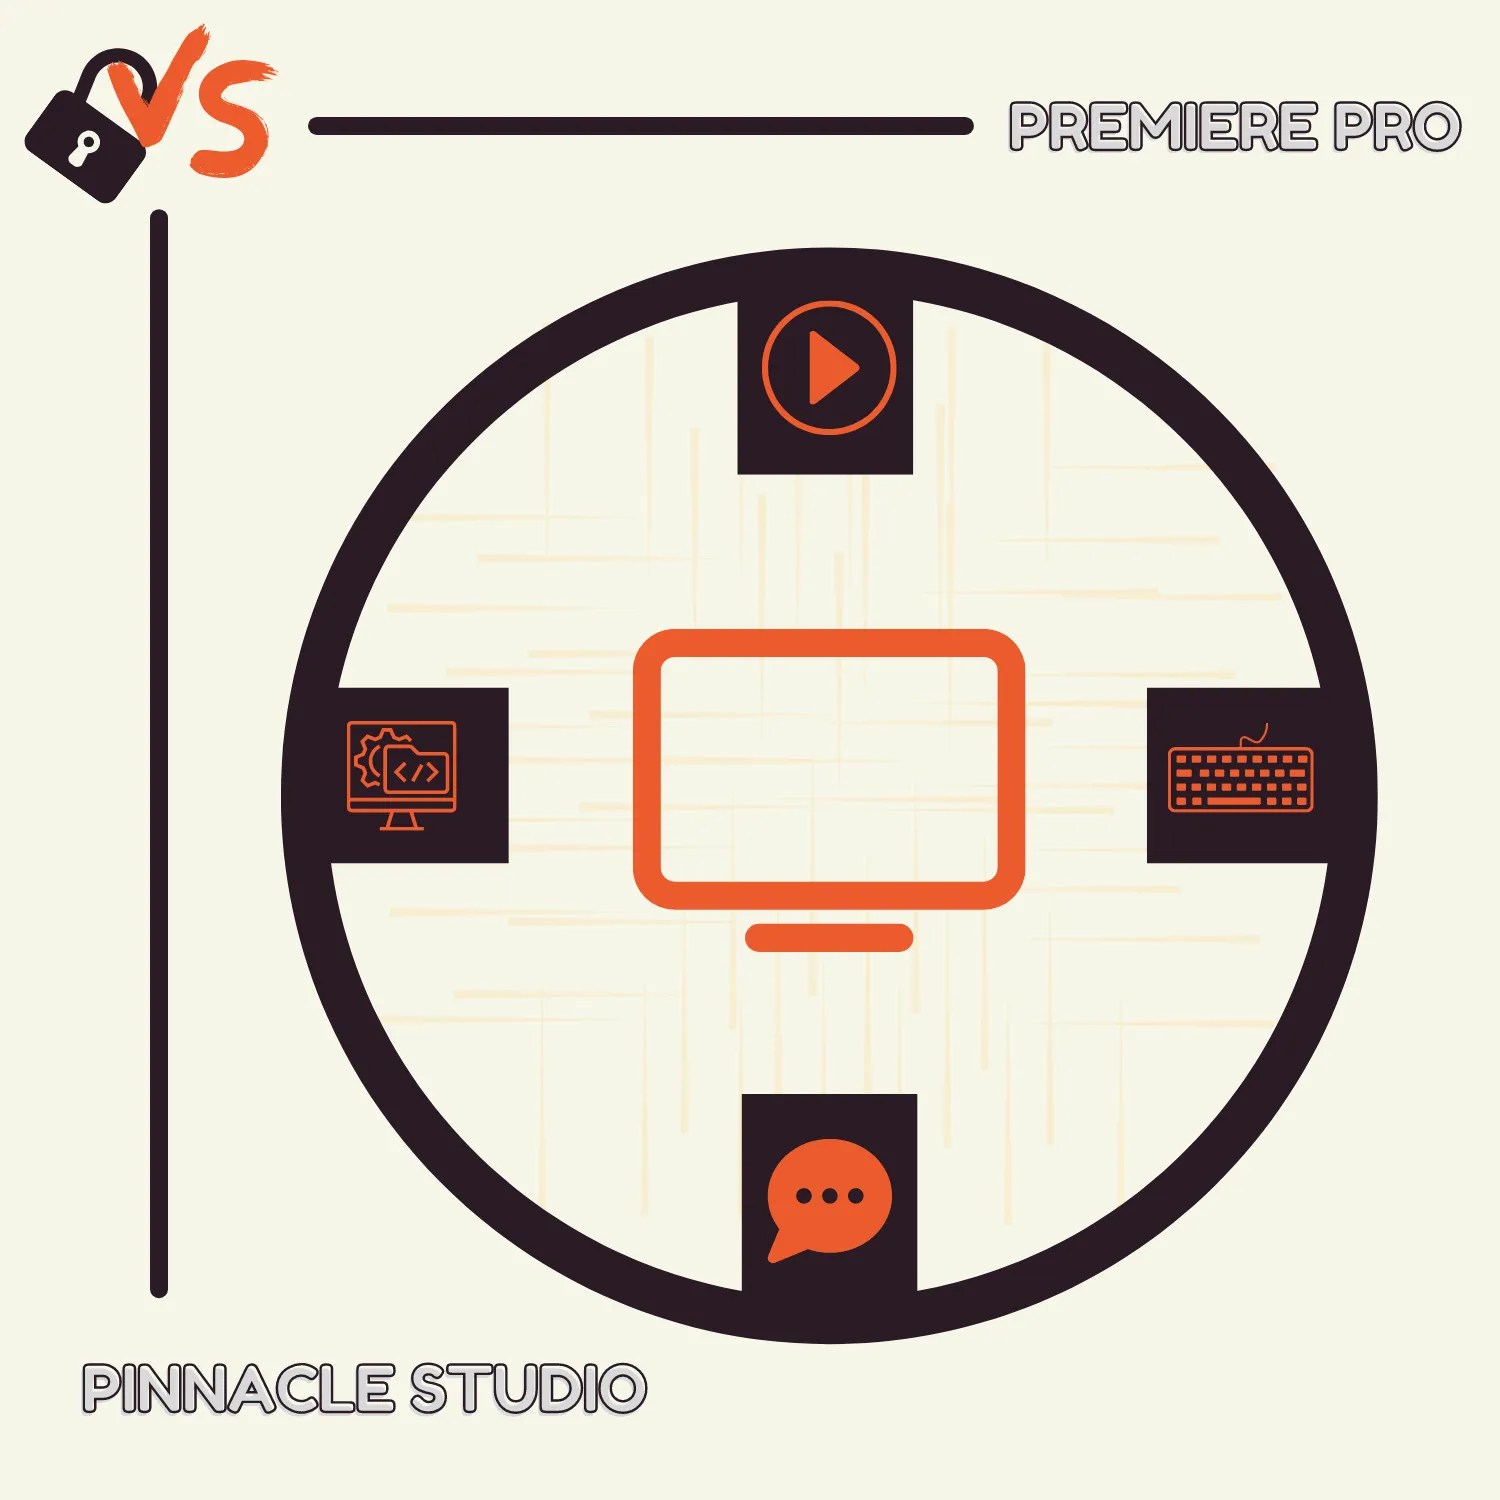 Pinnacle Studio vs. Premiere Pro